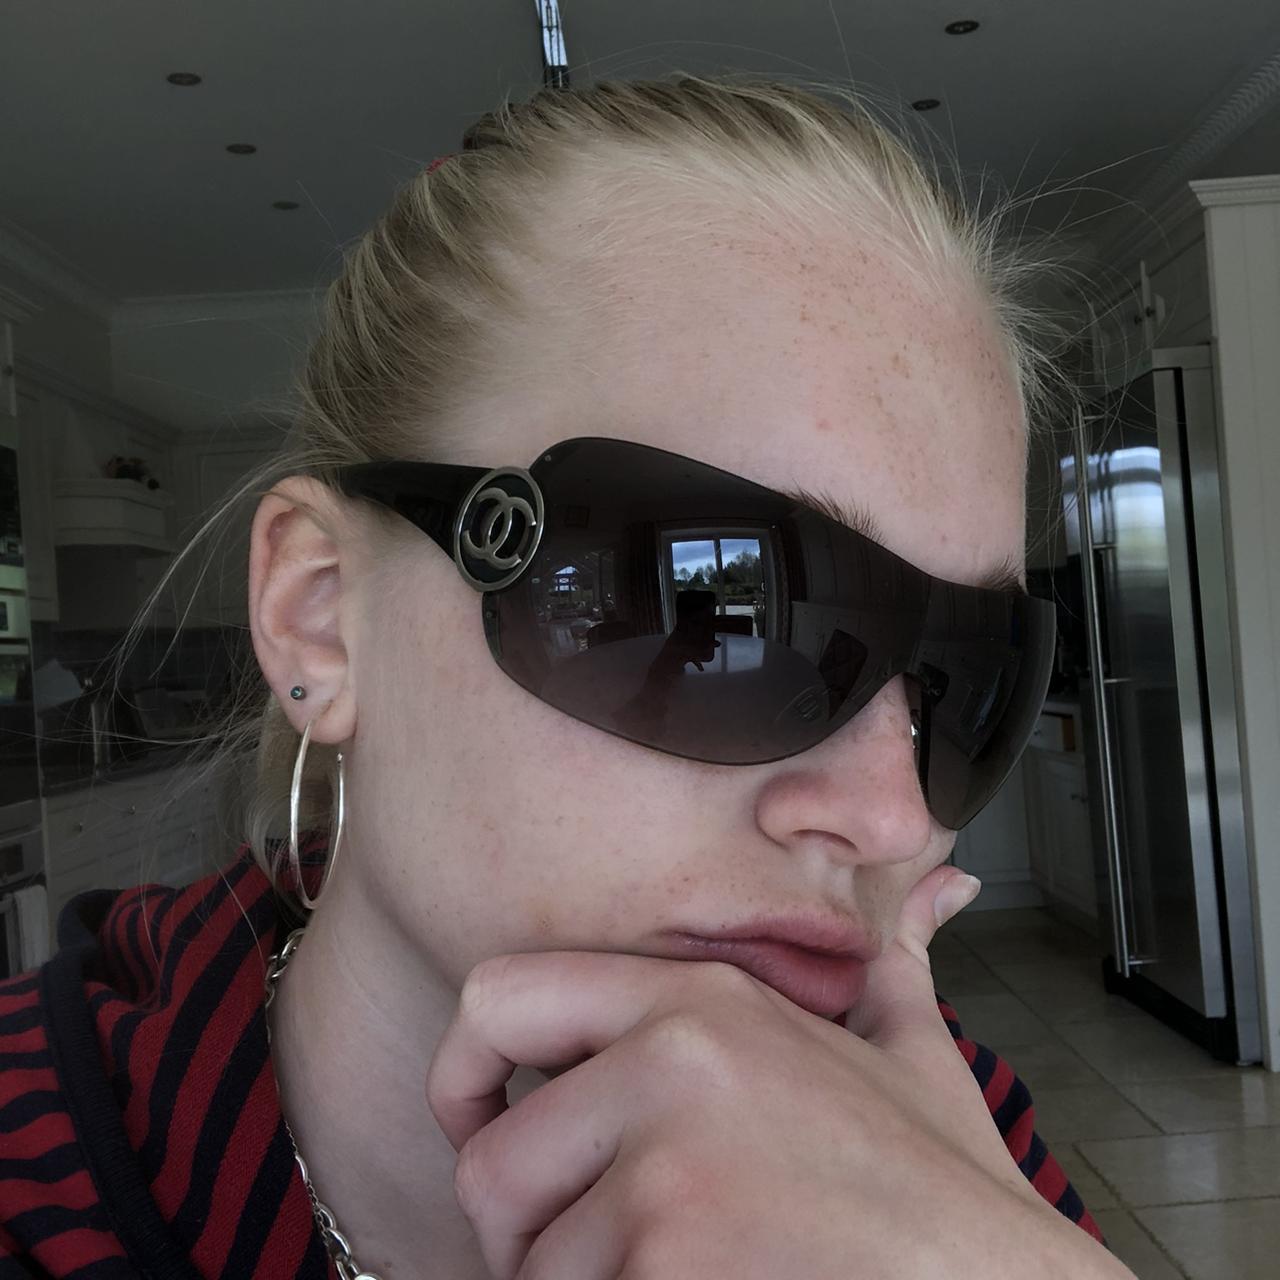 Chanel Women's Cat Eye Sunglasses - Black